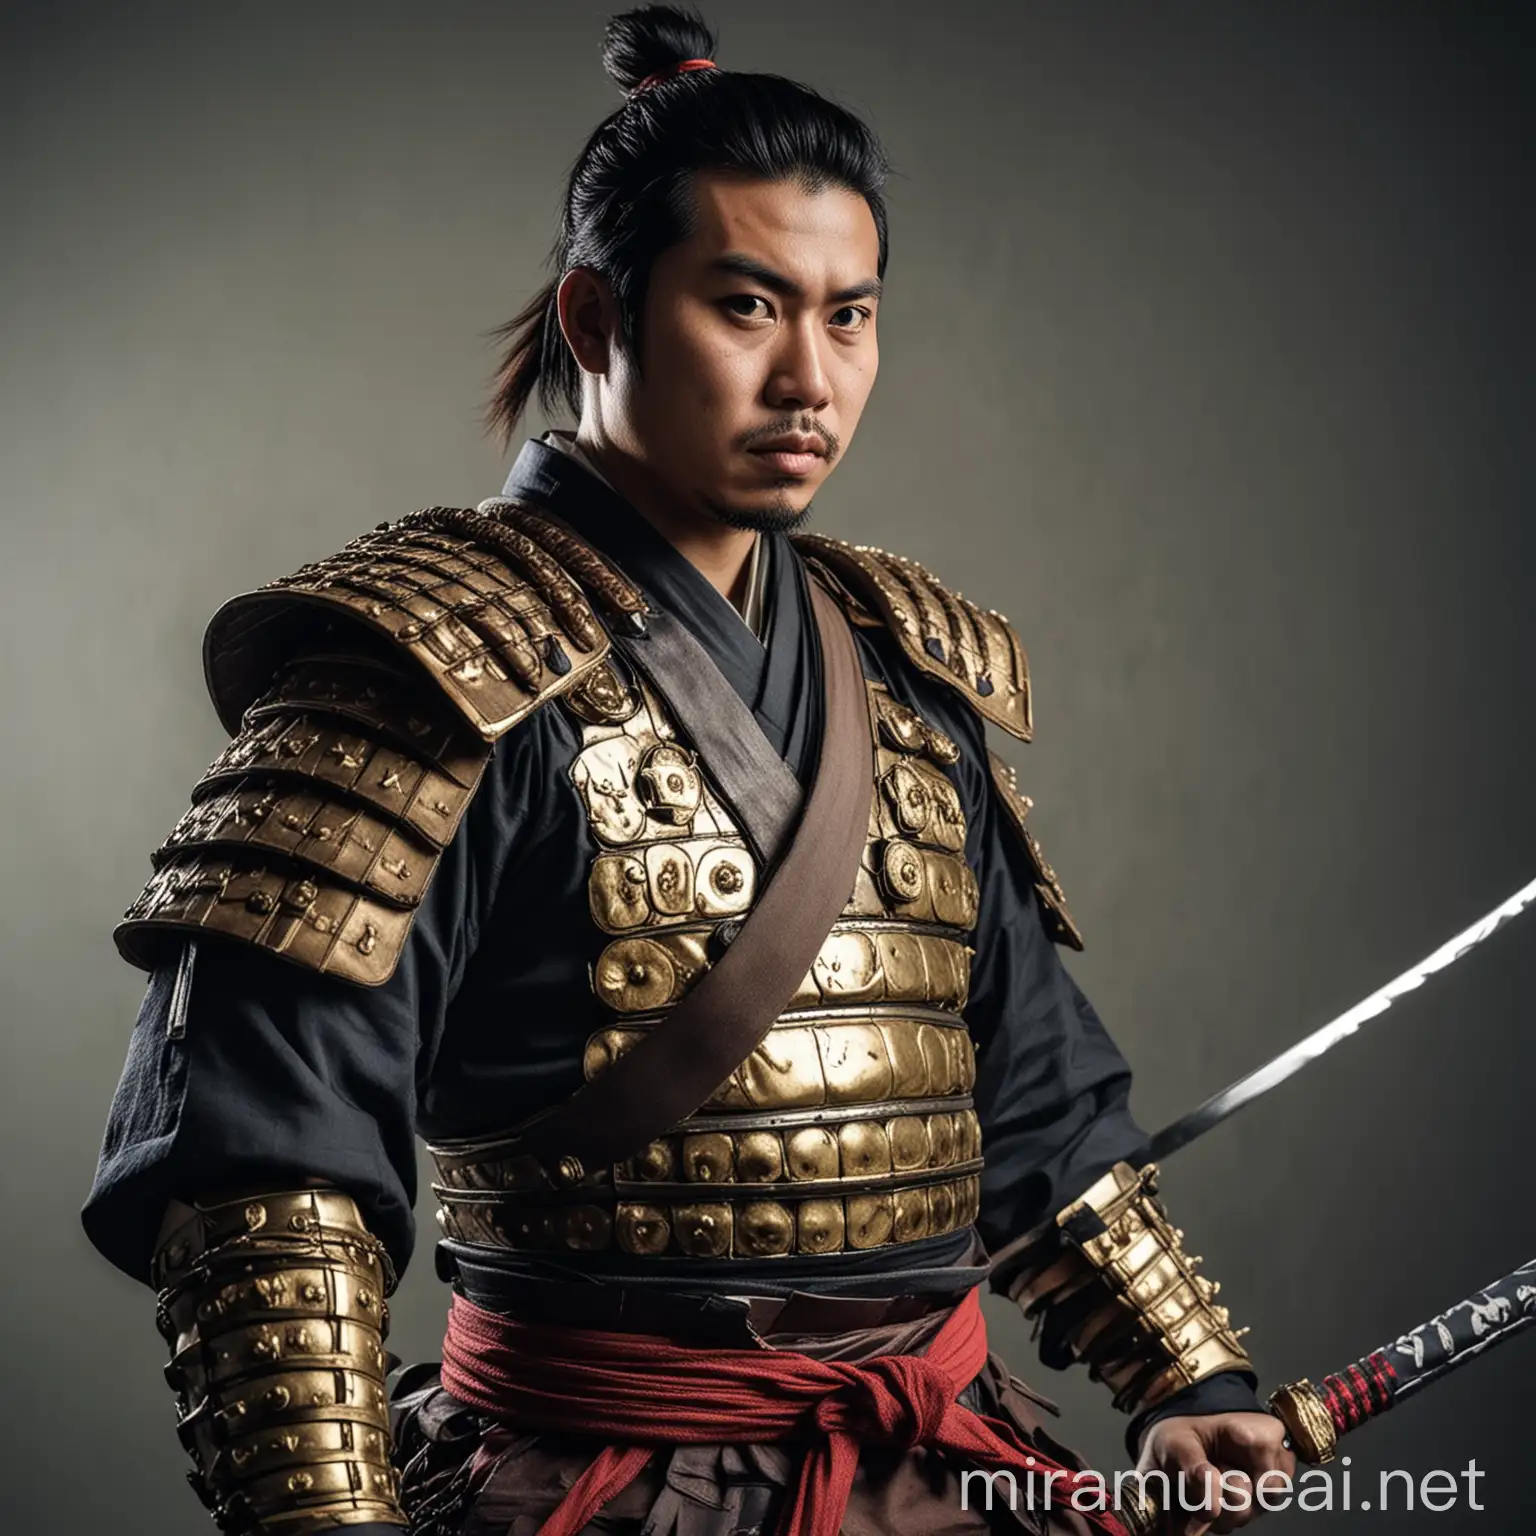 Seni fotografi seorang laki-laki indonesia usia 30 tahun, bertubuh agak gemuk, cosplay menjadi tadakatsu Honda dari samurai warrior, efek dramatis, cinematic UHD 